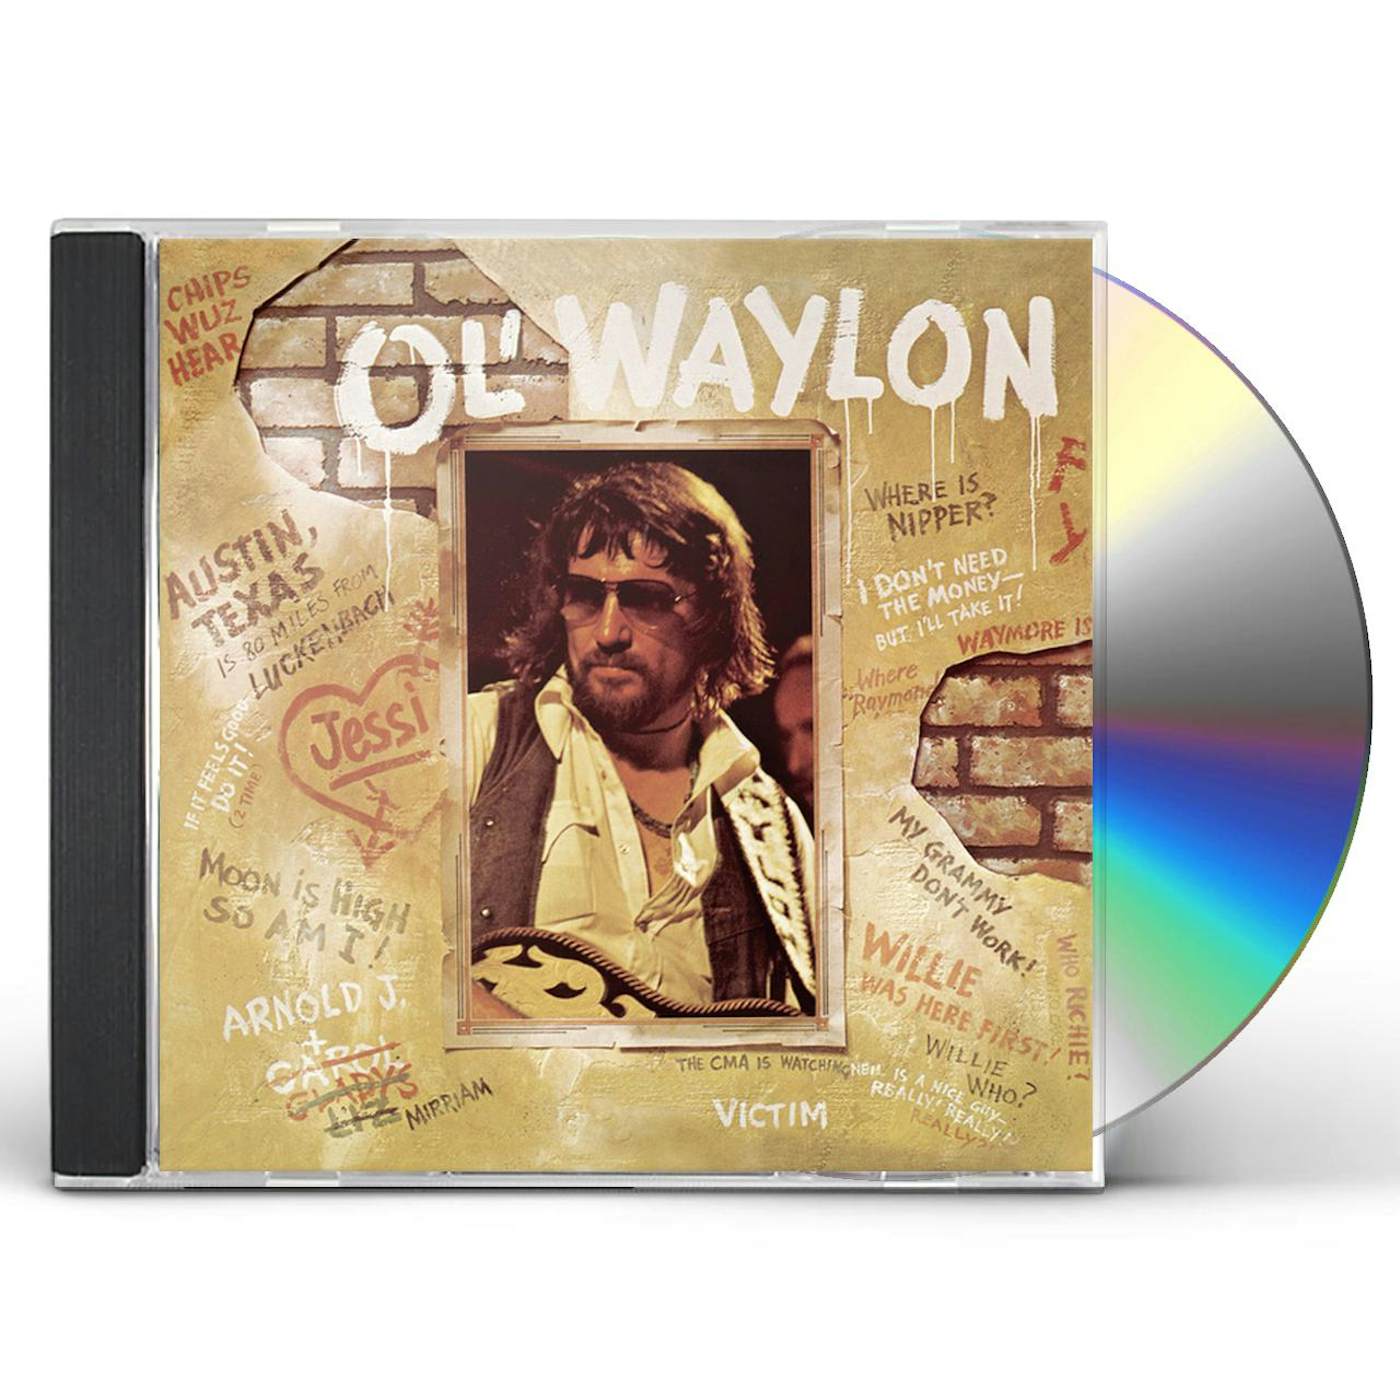 Waylon Jennings OL WAYLON CD